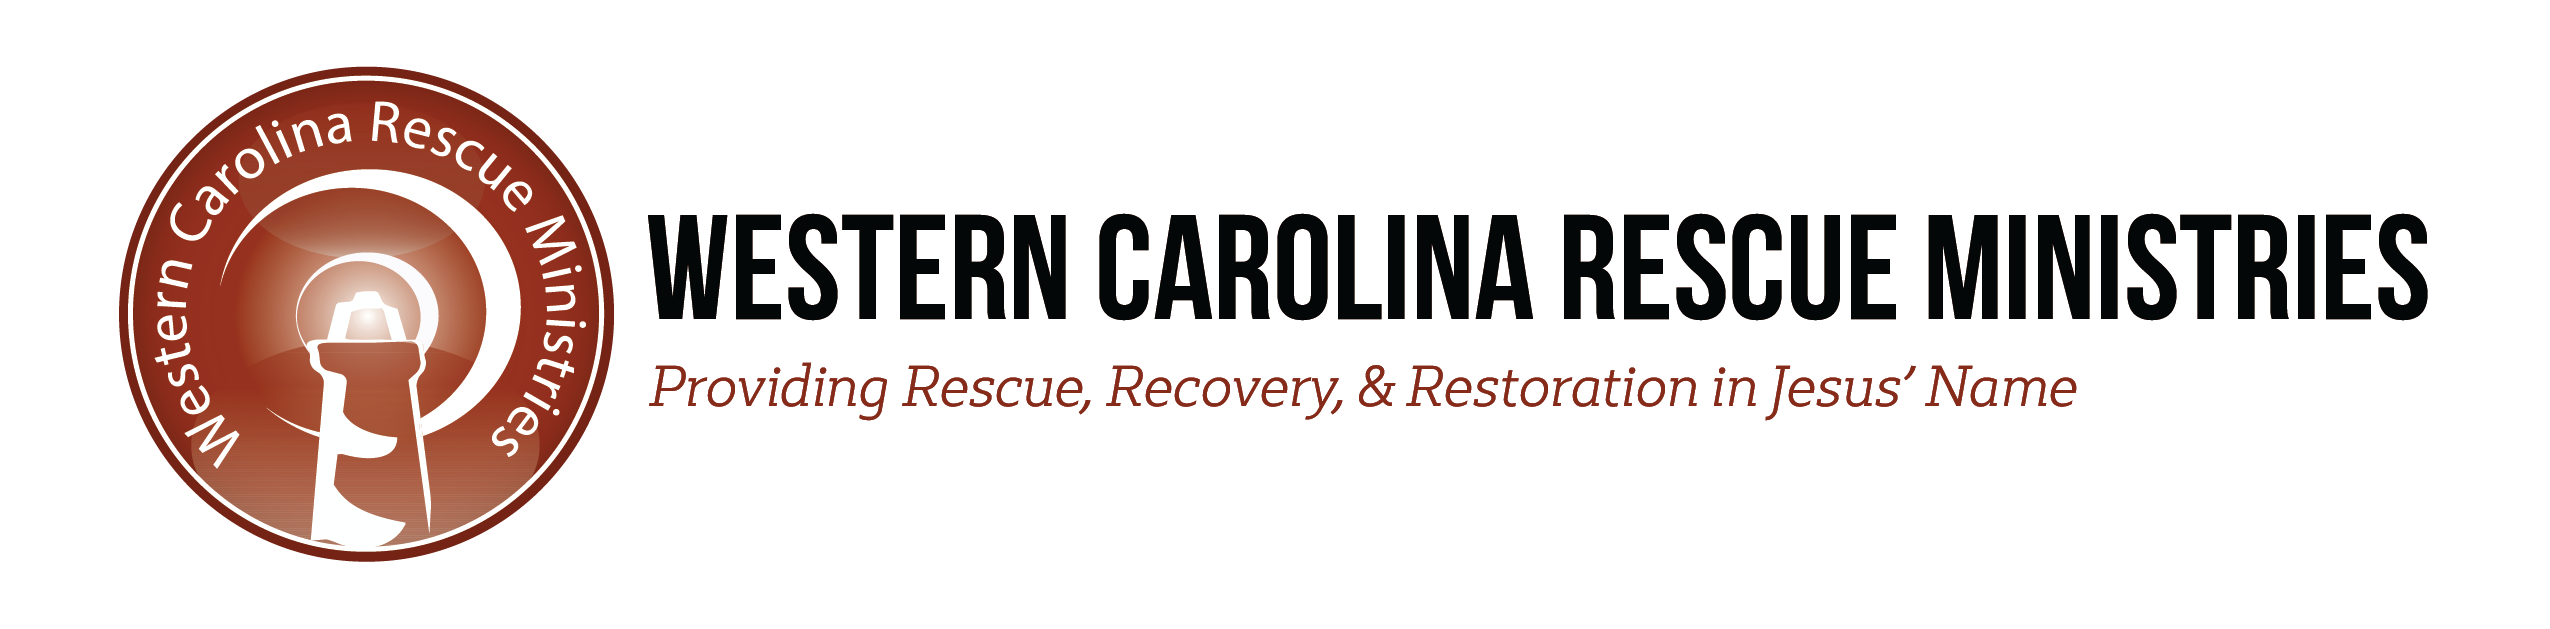 Western Carolina Rescue Ministry Logo